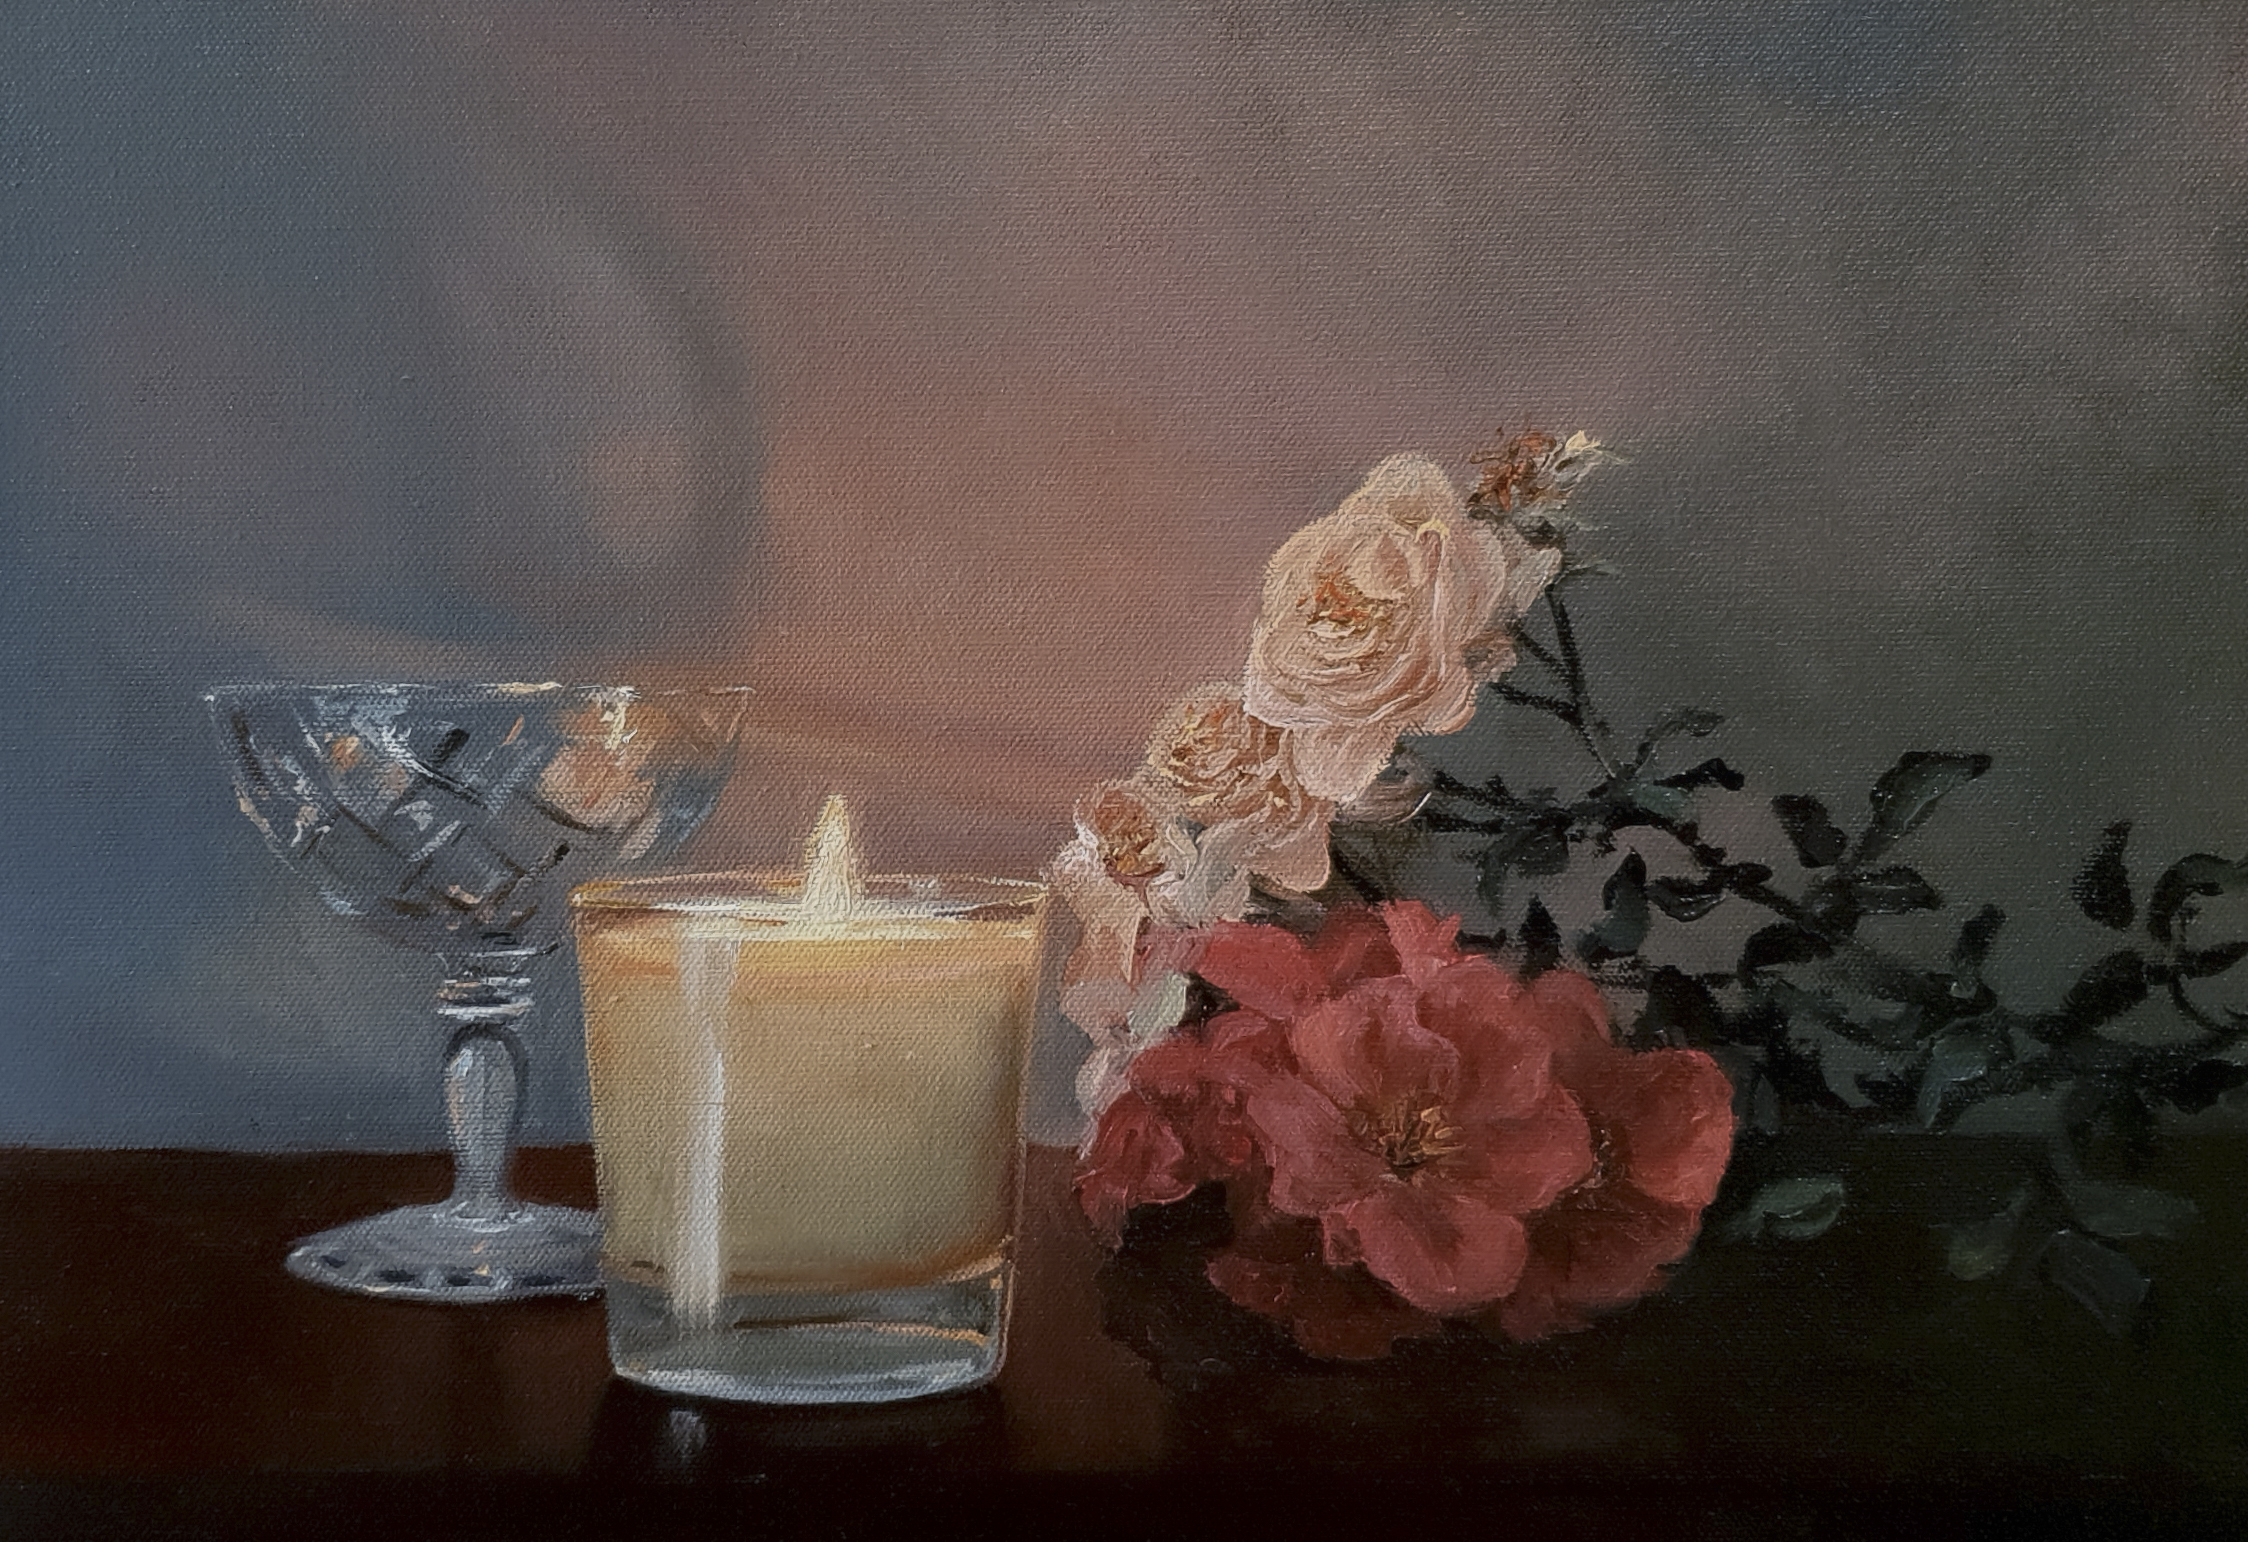 Last of the Summer Roses by Llael McDonald | Lethbridge 20000 2021 Finalists | Lethbridge Gallery